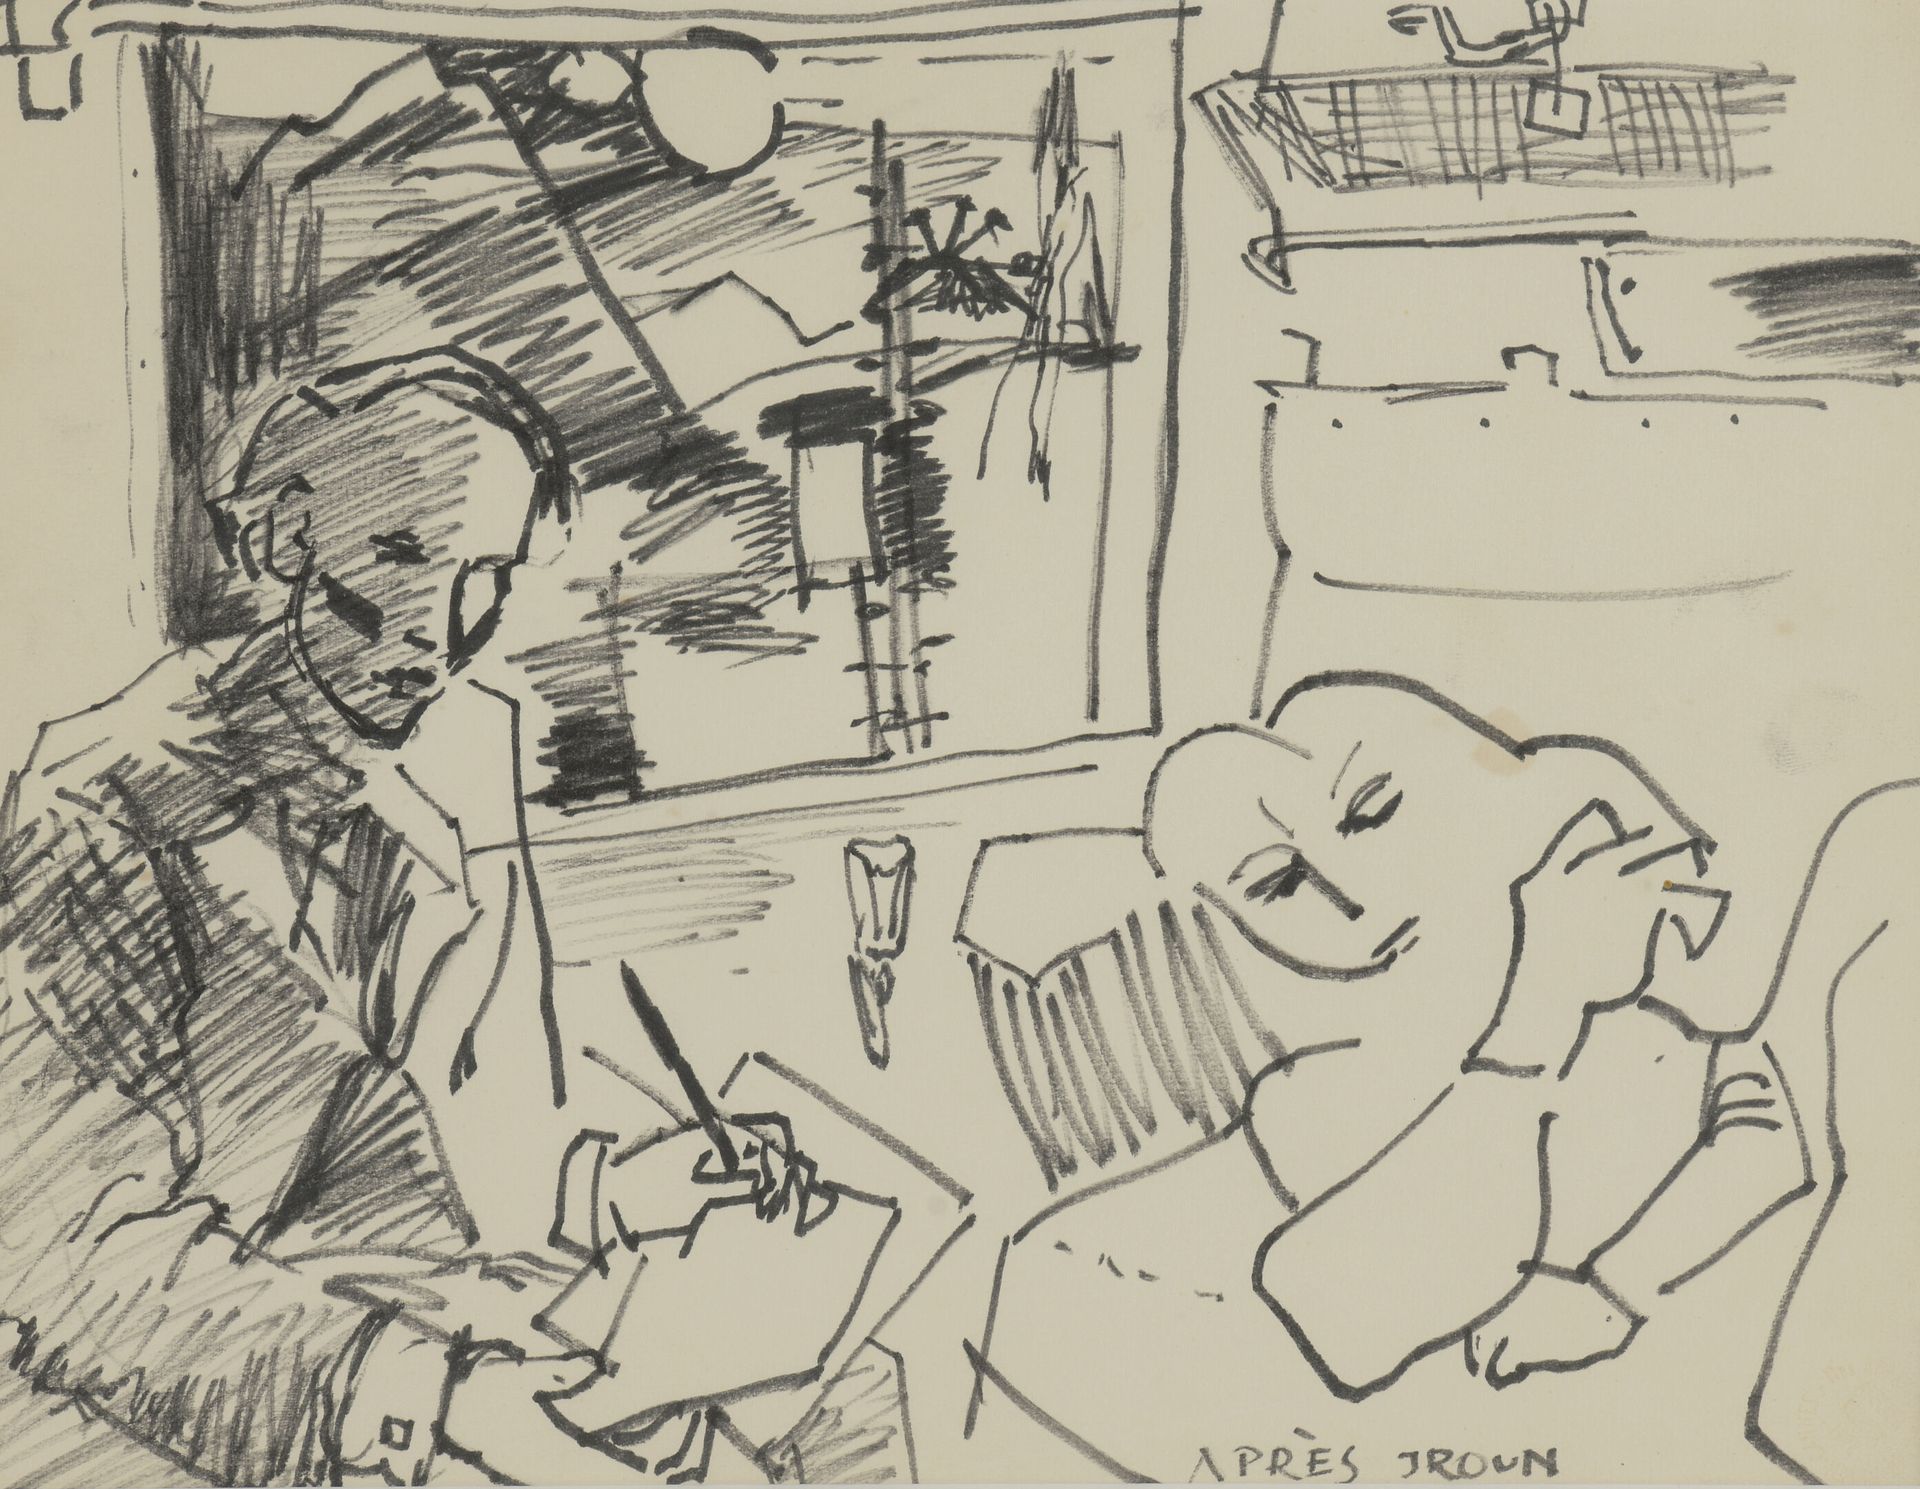 Null Ludovic KLIMEK (1912-1993)

After Jroun

Felt pen drawing on paper, titled &hellip;